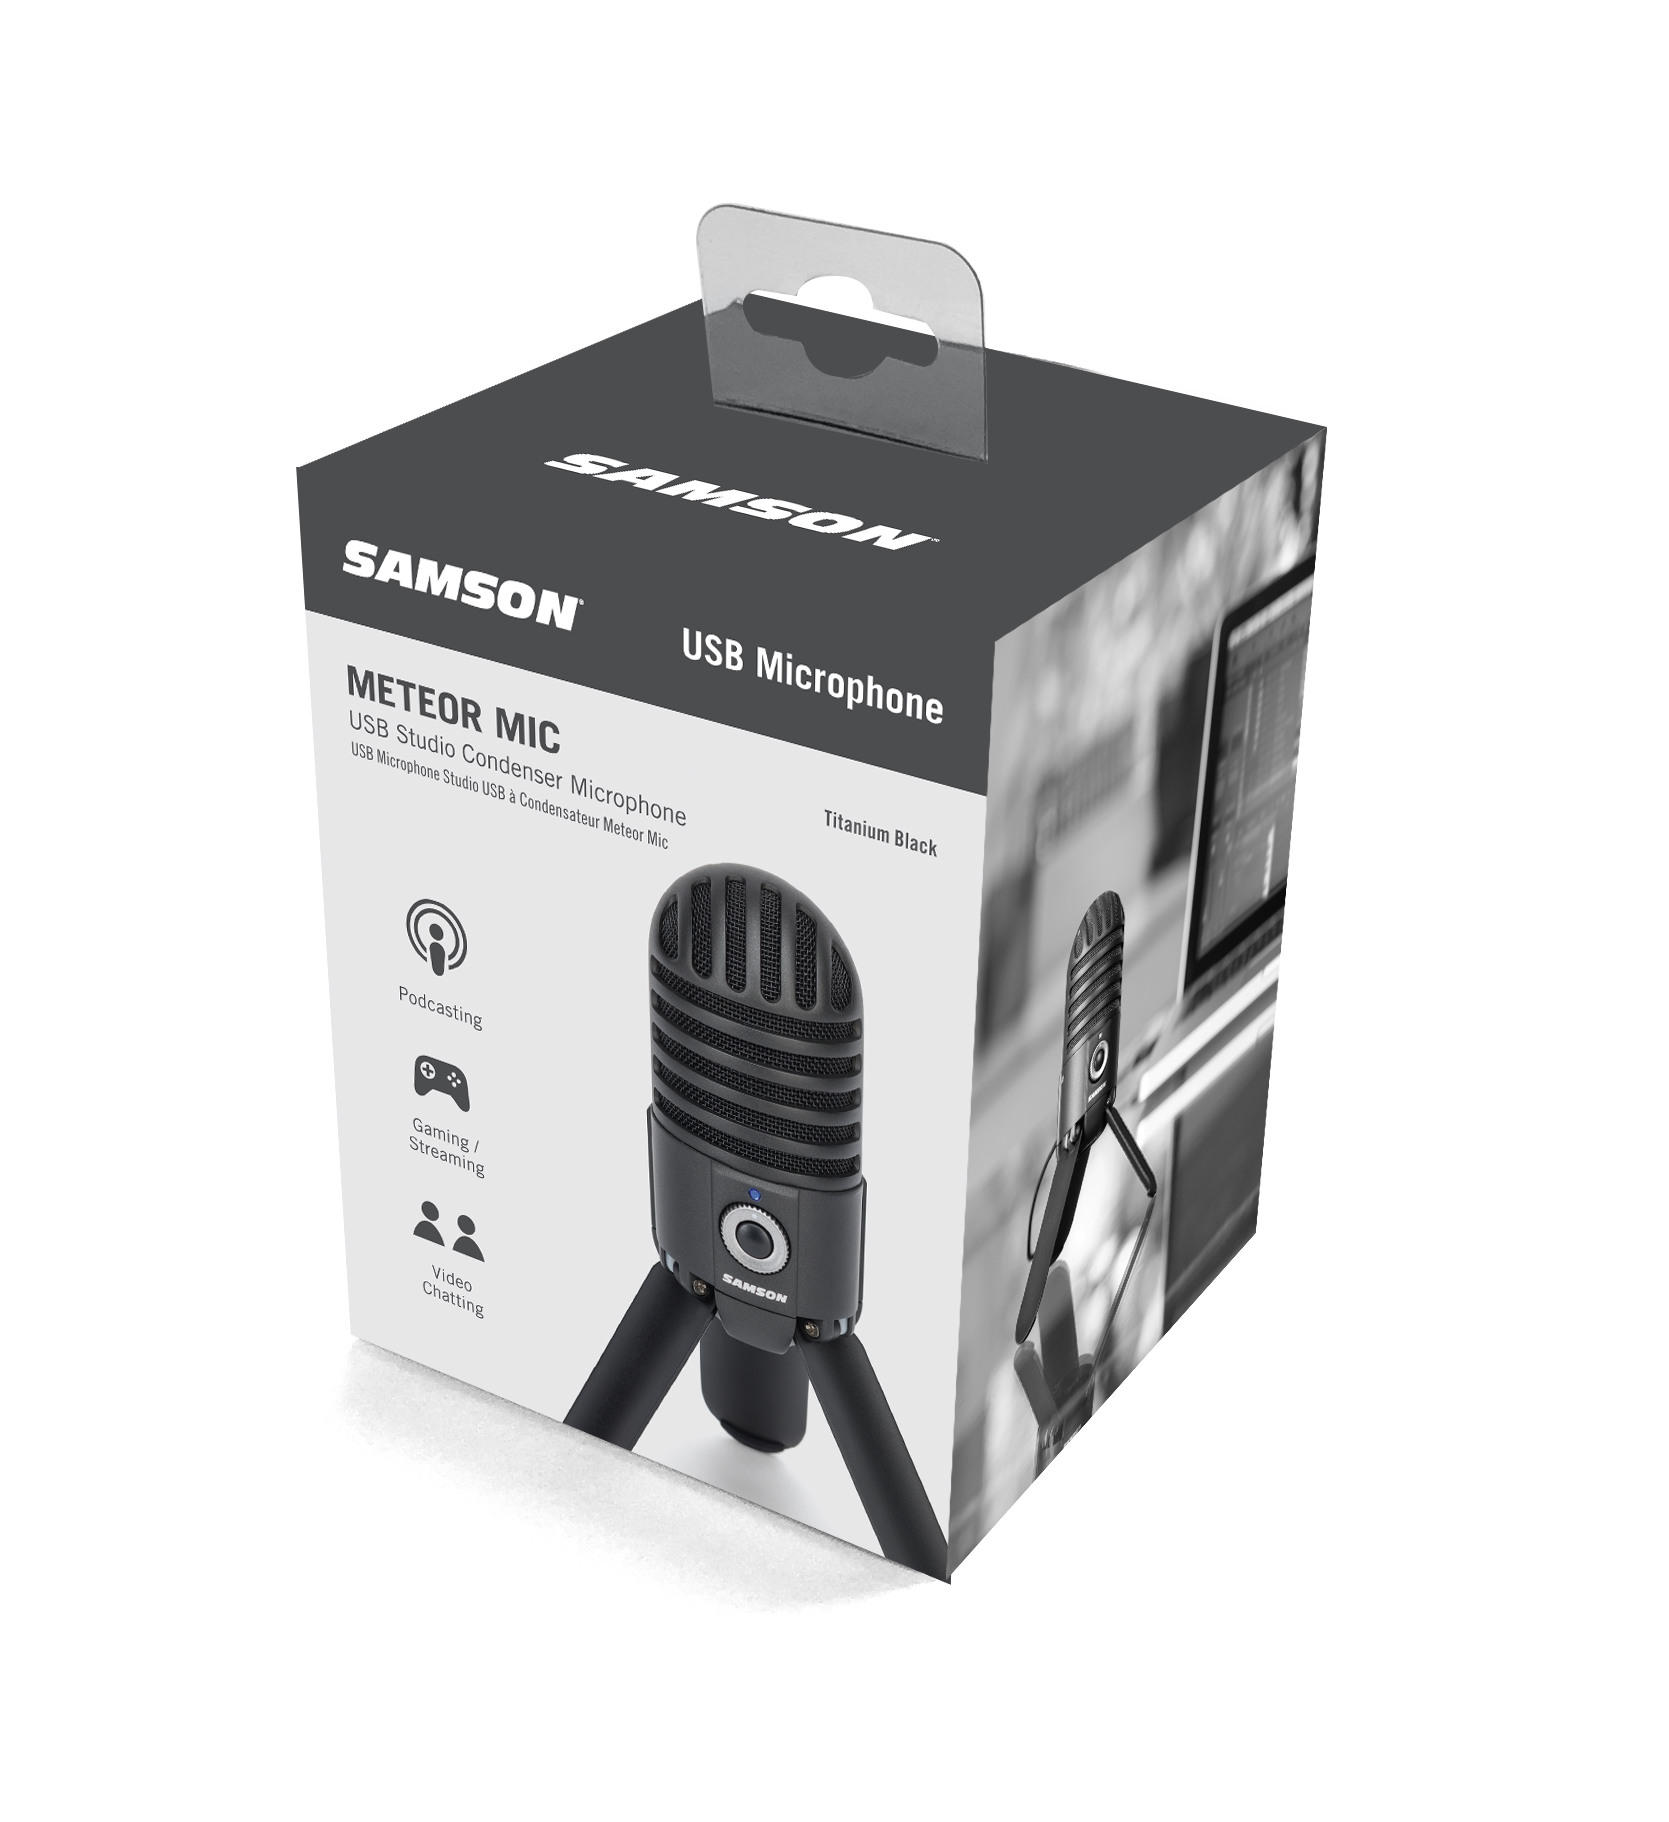 SAMSON Meteor USB Microphone black SAMTRTB Studio Condenser Micro